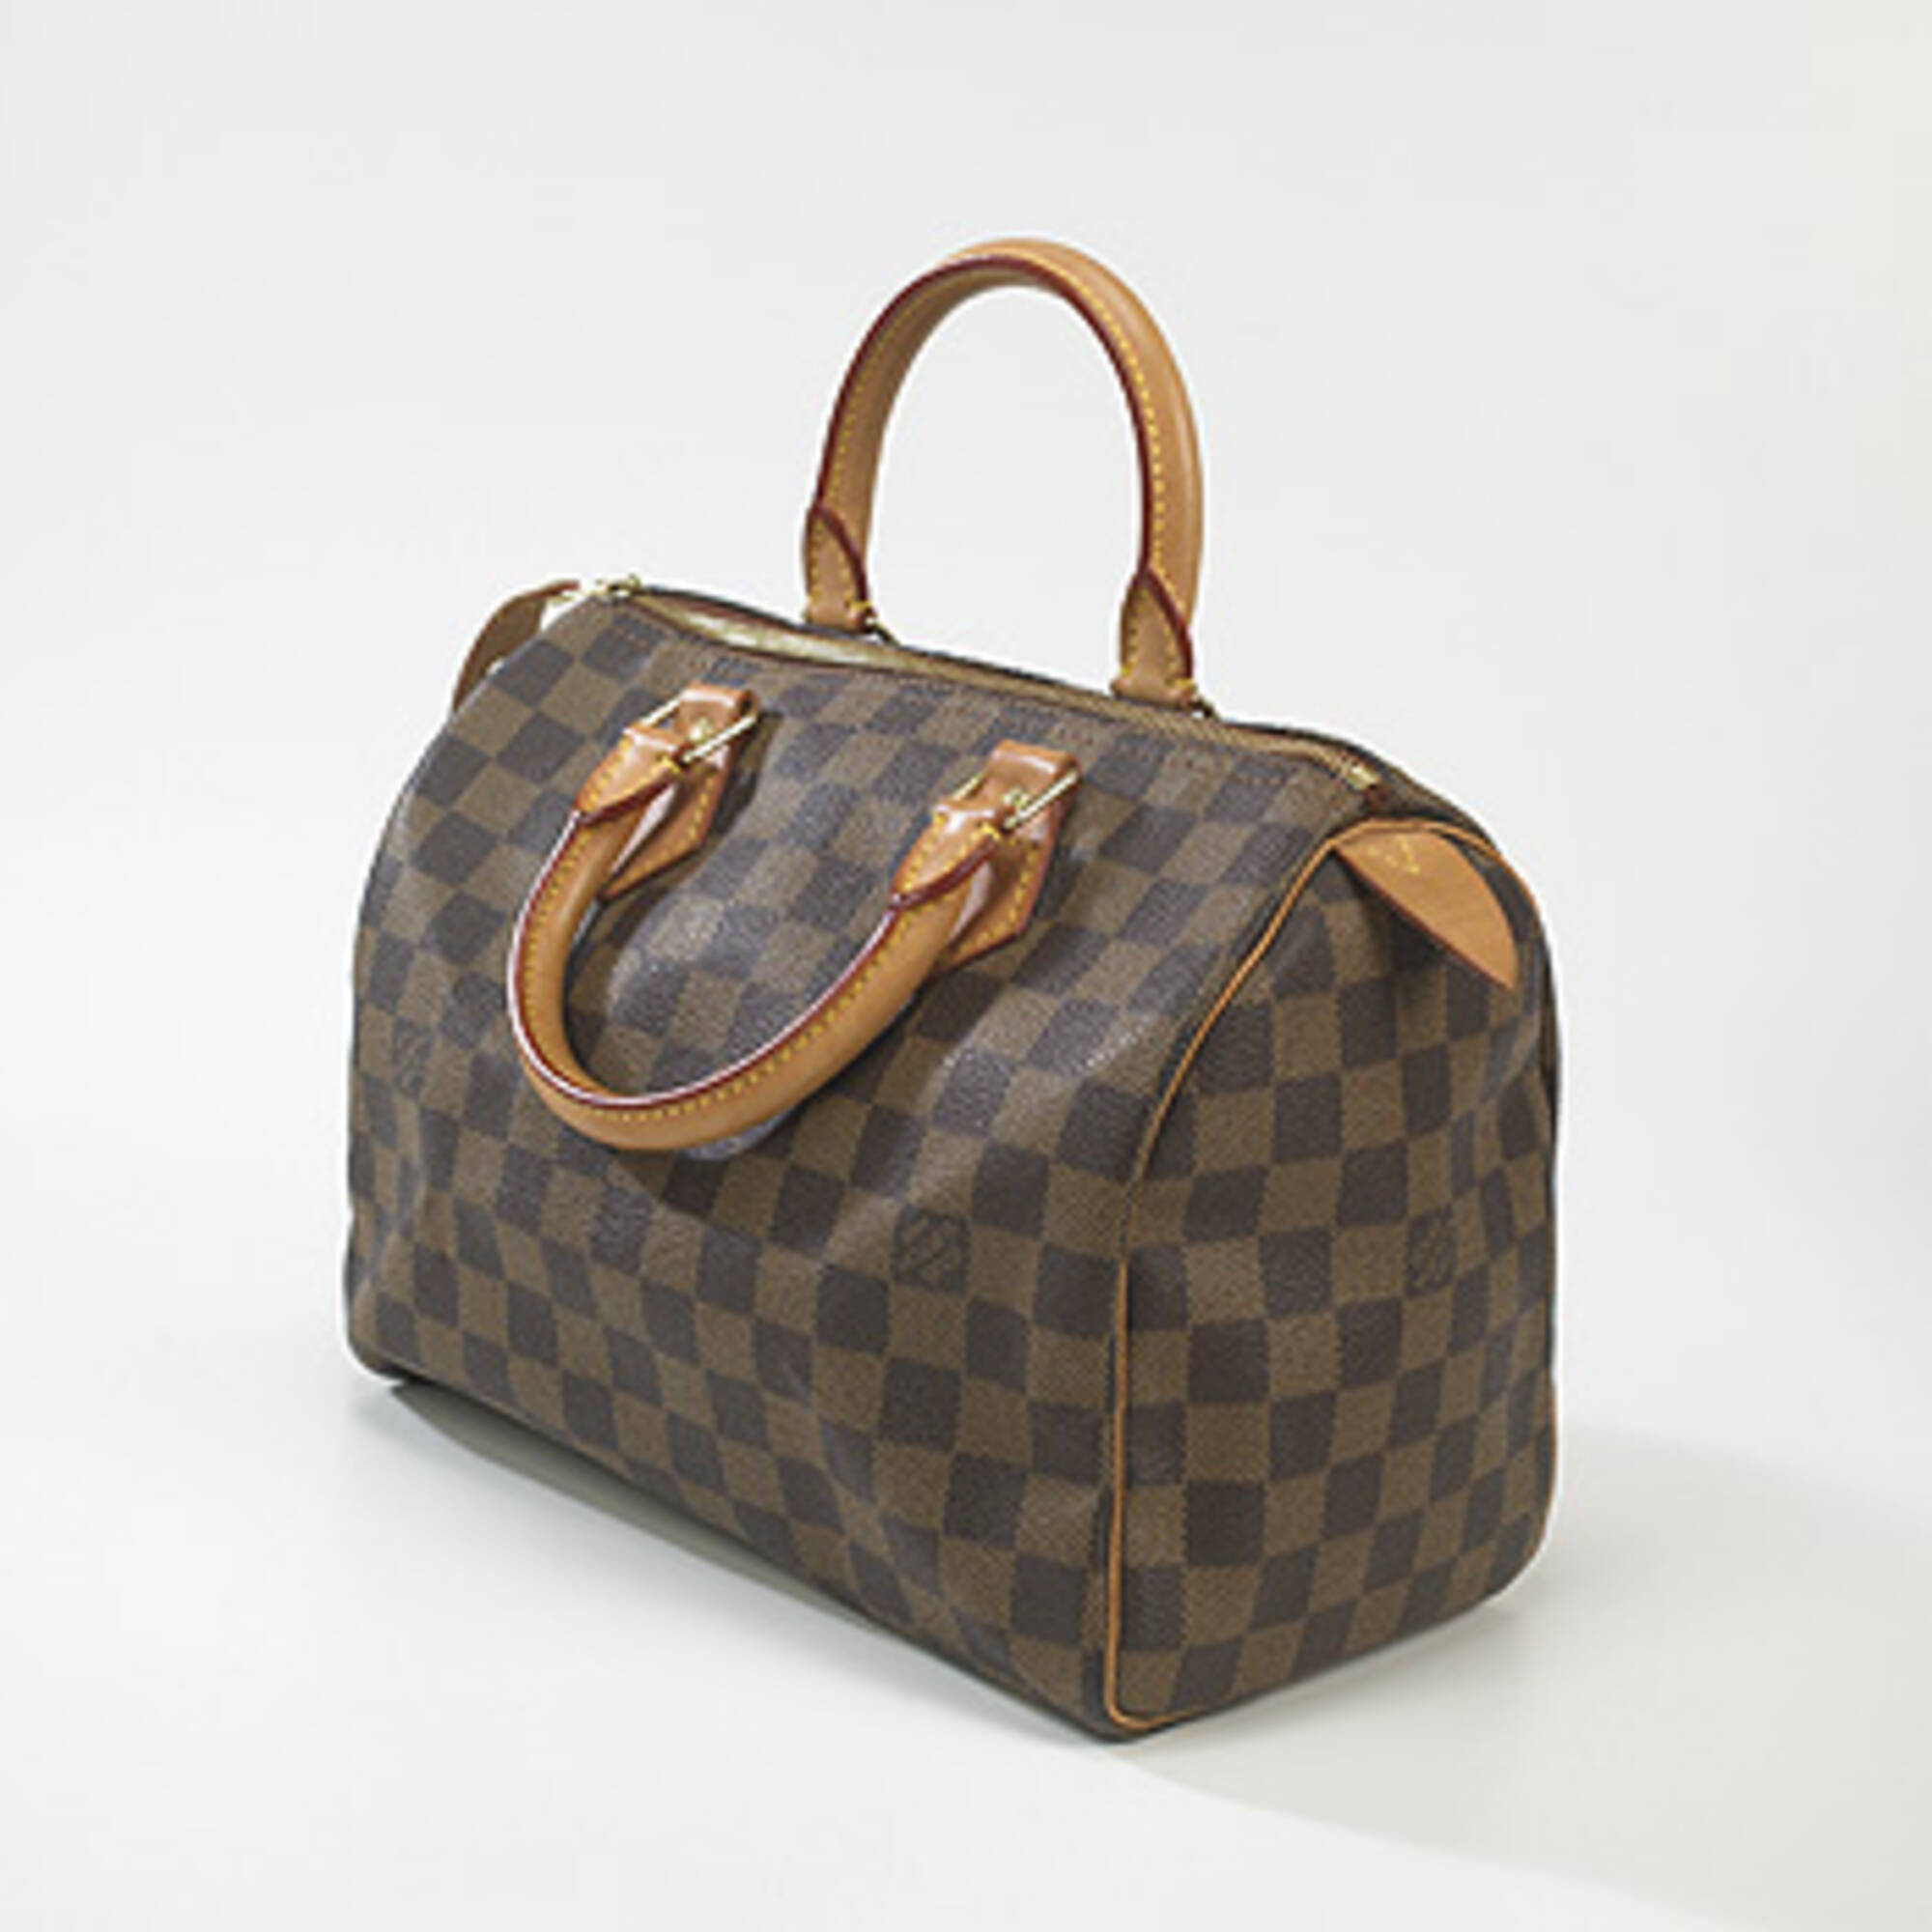 145: LOUIS VUITTON, handbag < Branded Luxury, 14 June 2005 < Auctions